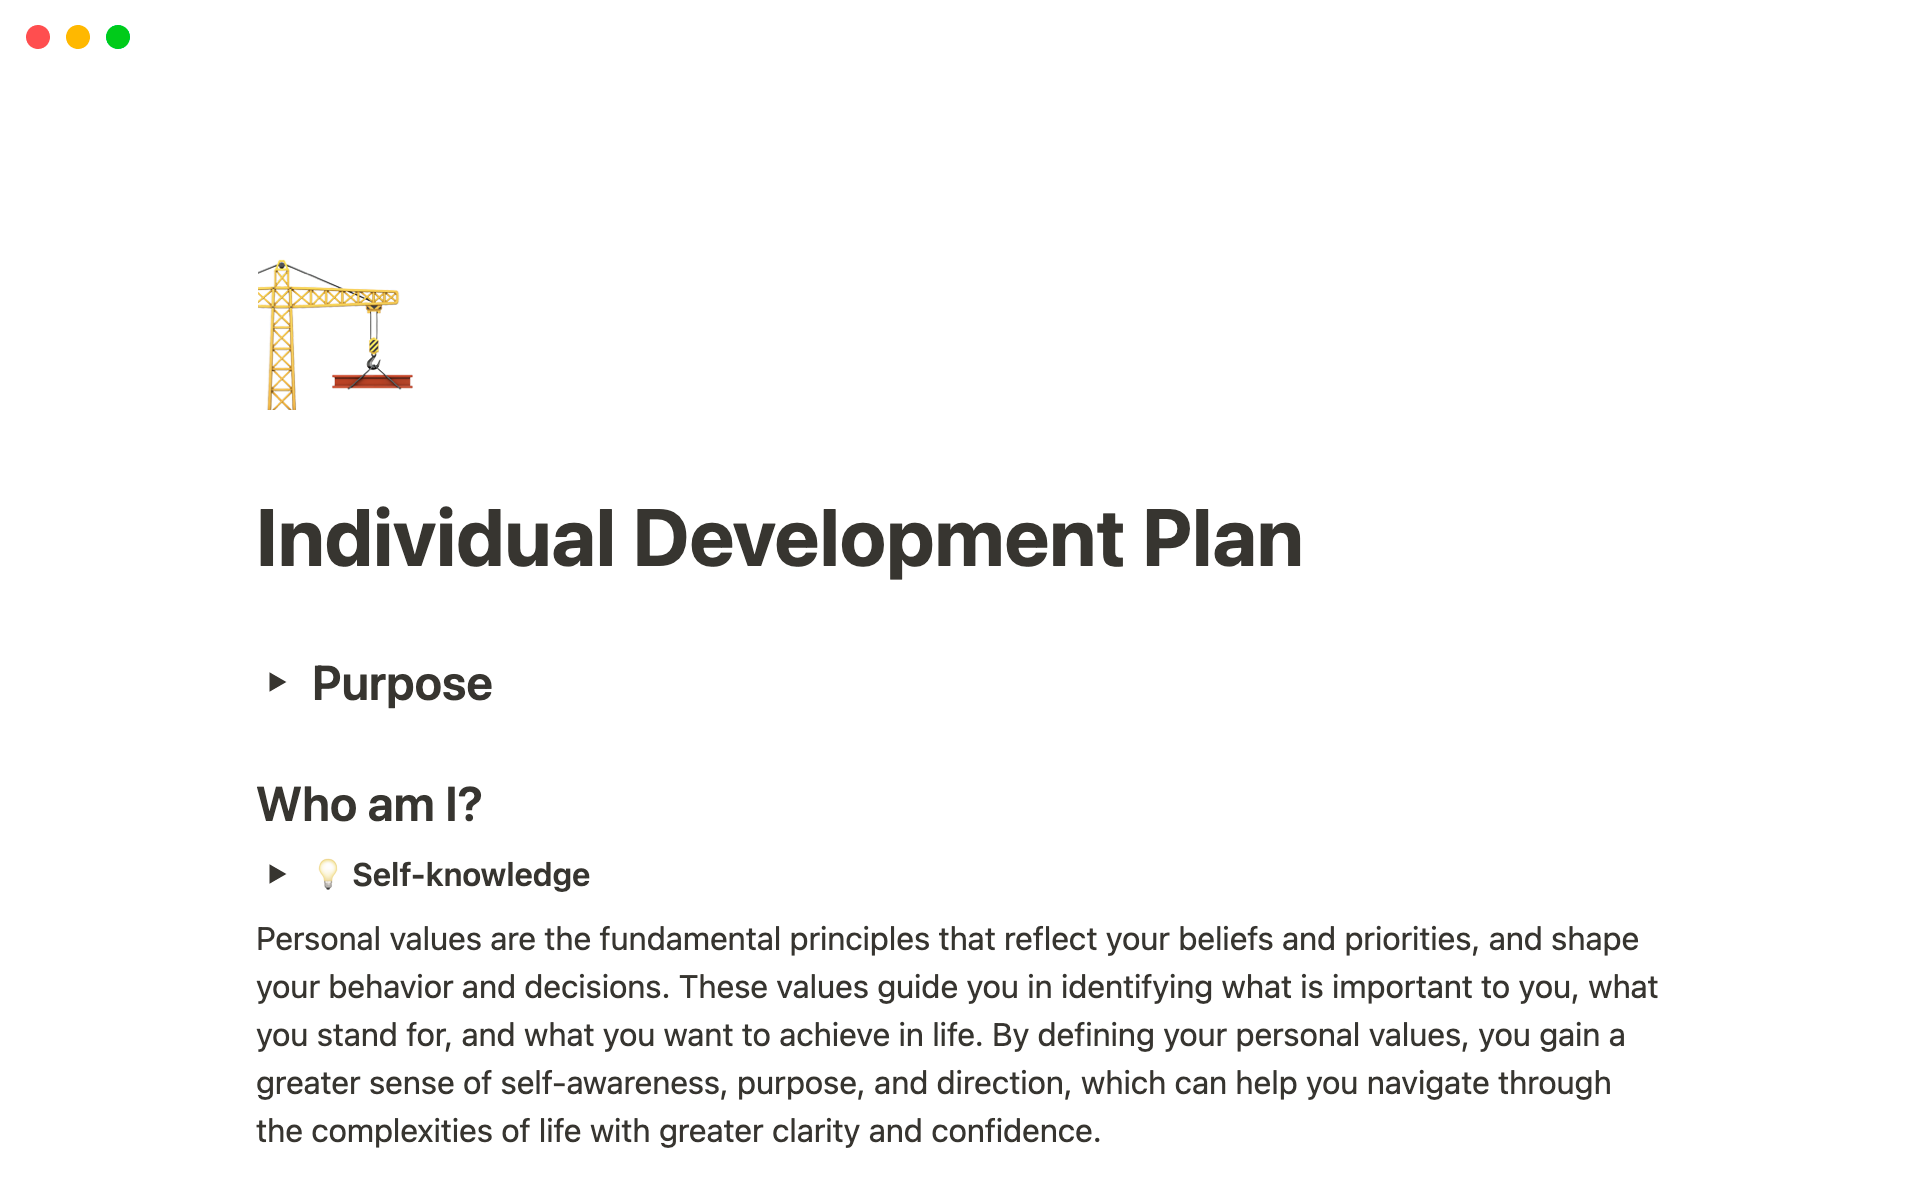 Aperçu du modèle de Individual Development Plan - IDP